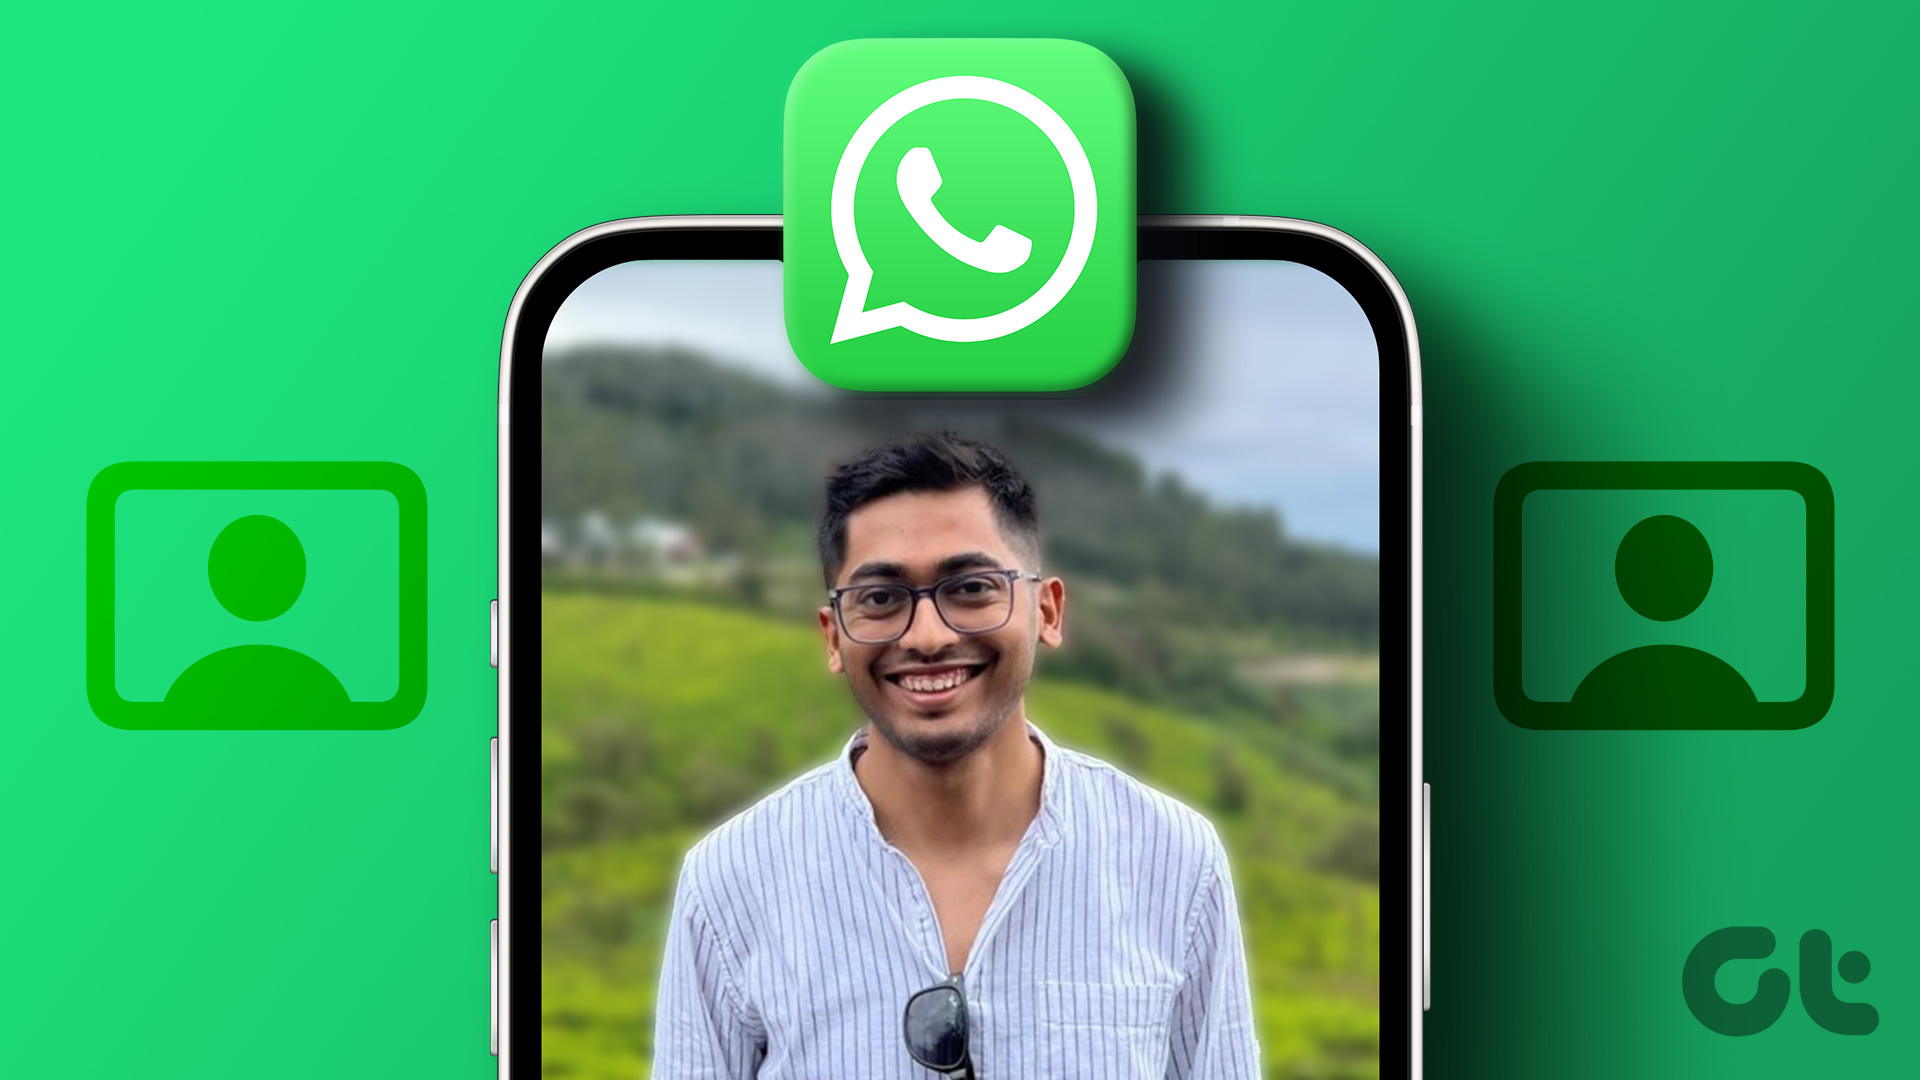 Blur Background on WhatsApp Video Call